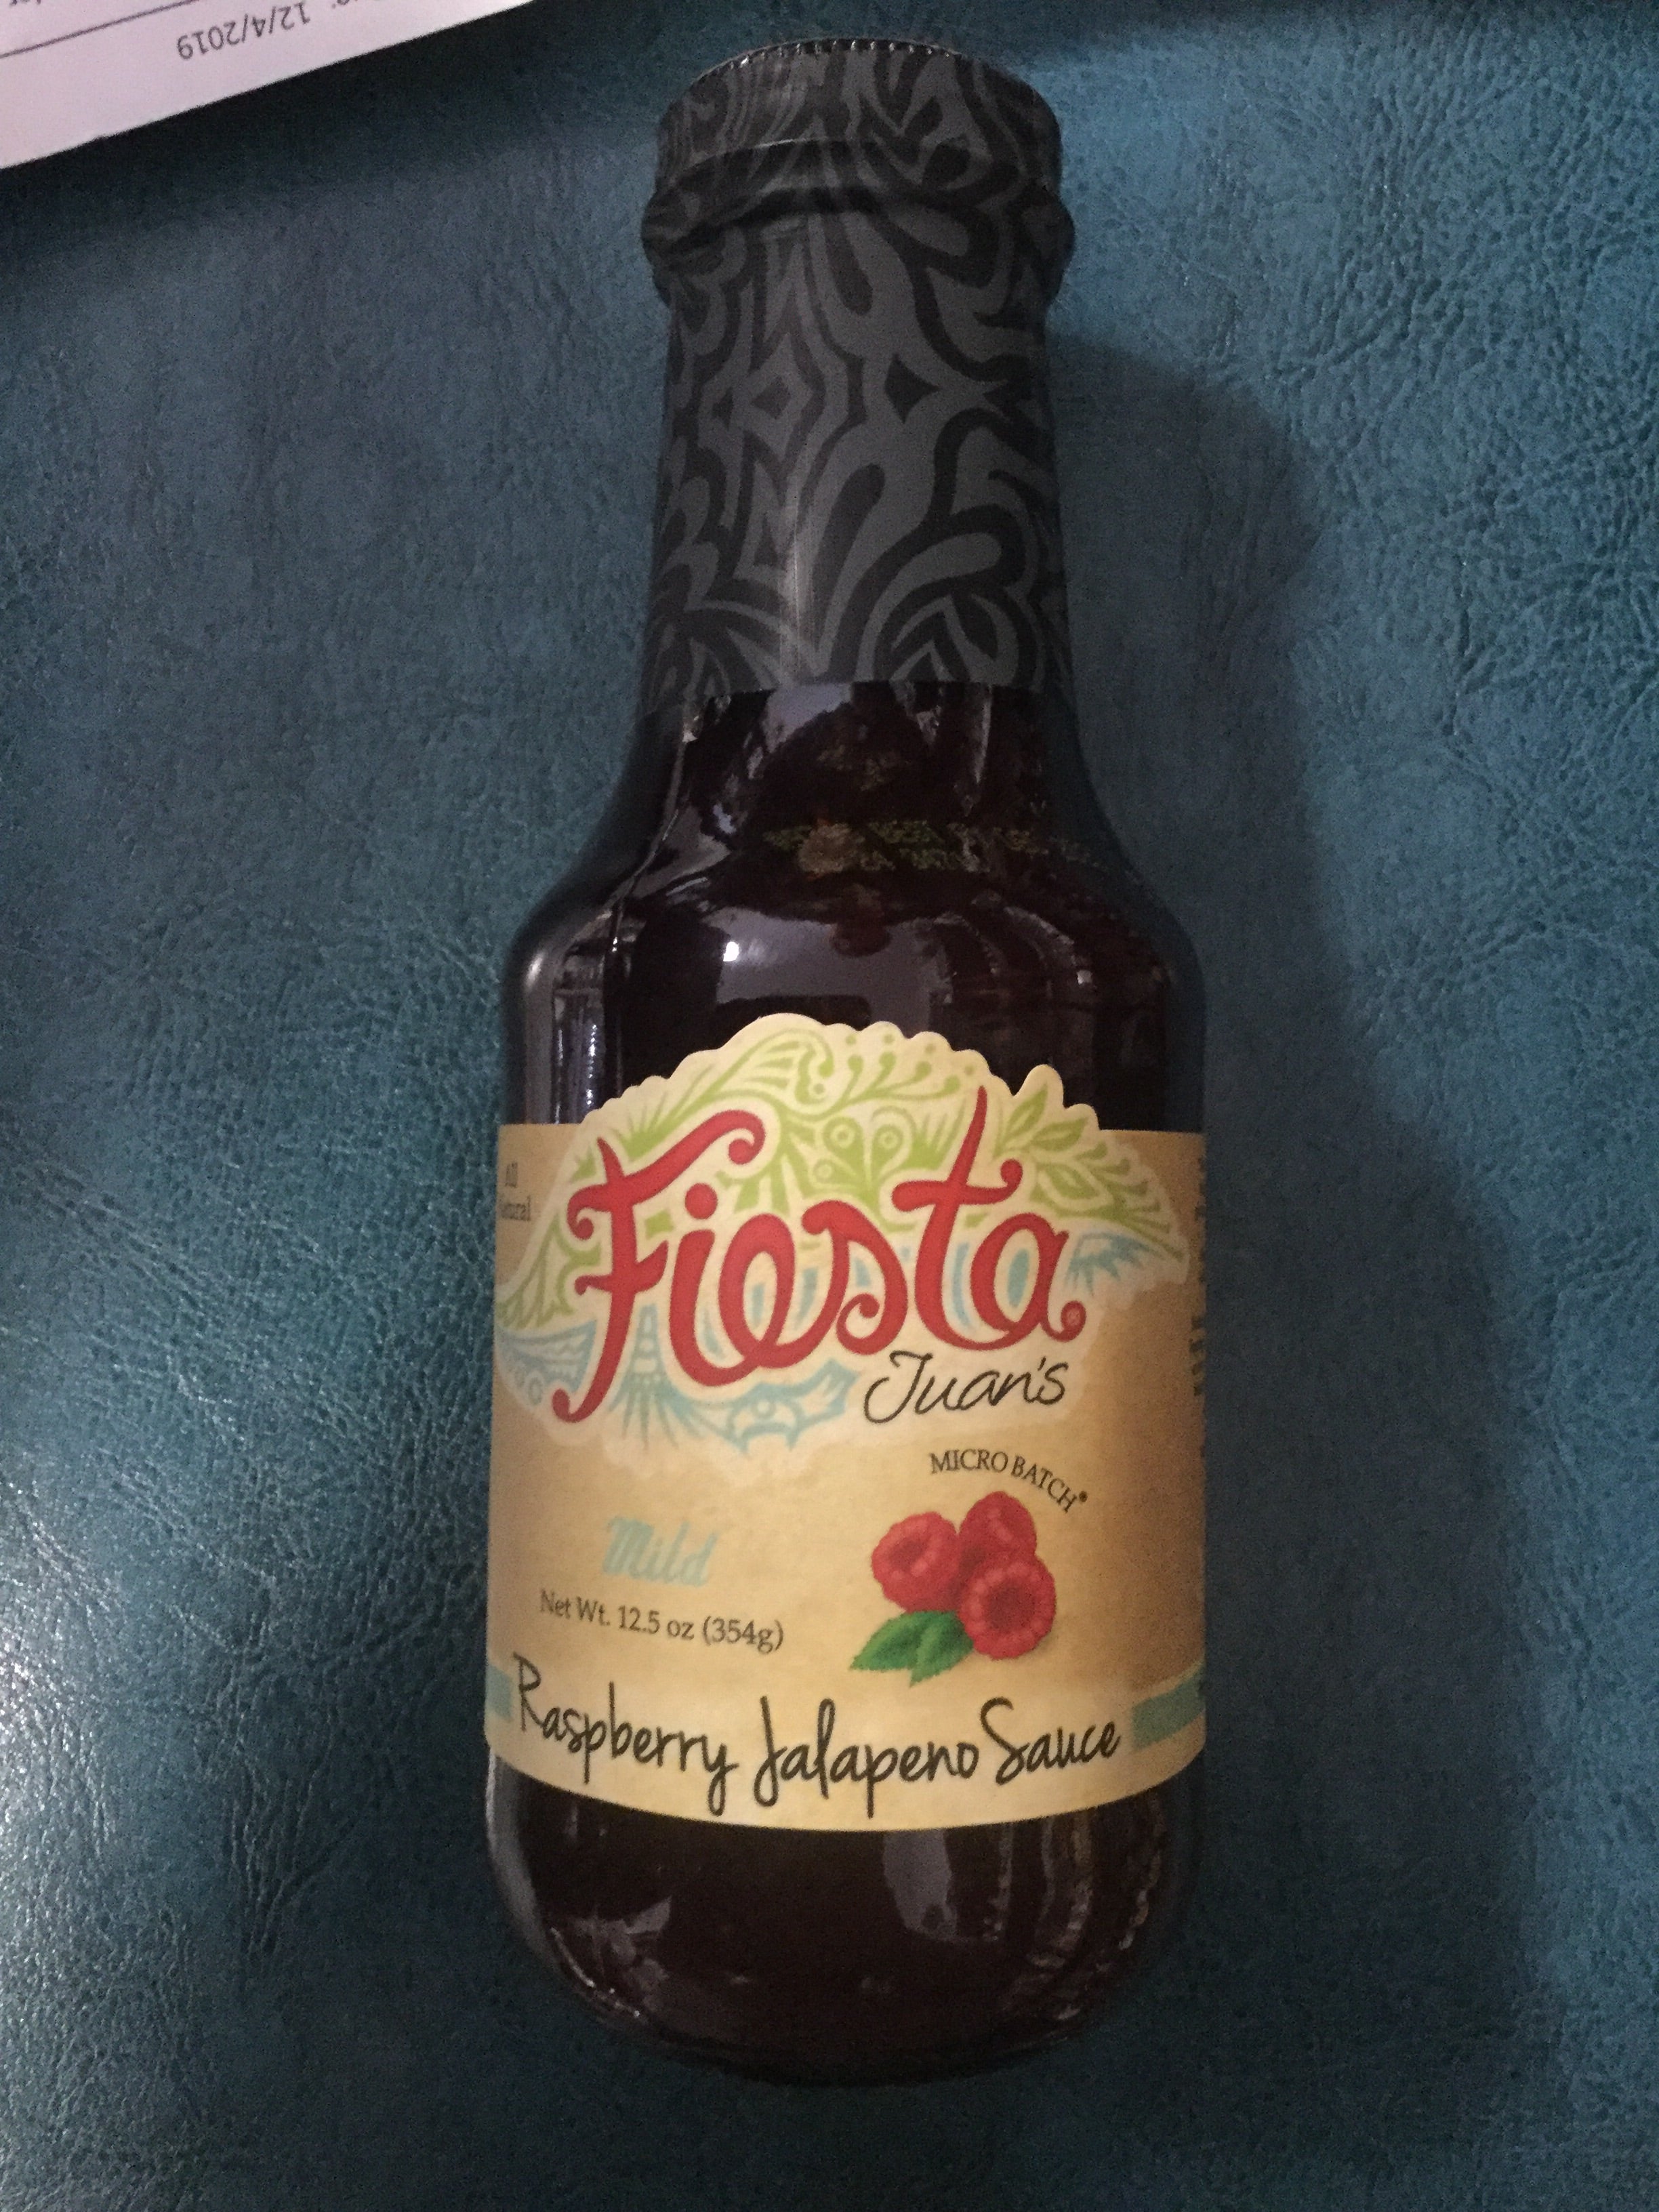 Raspberry jalapeño sauce